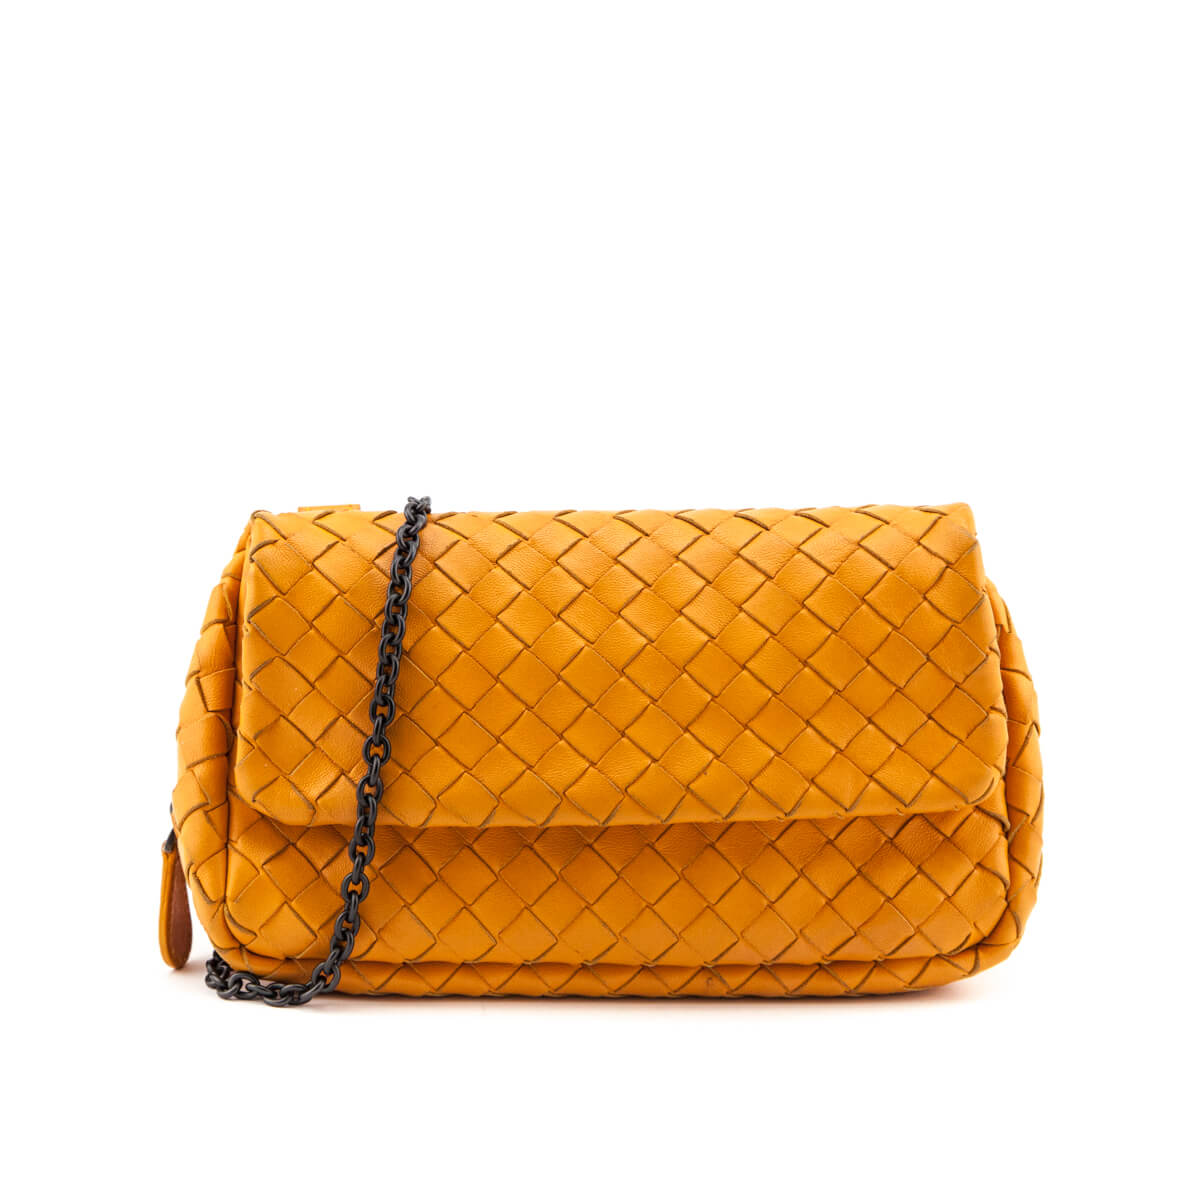 Bottega Veneta Clutch with a chain  Bottega veneta clutch, Trending handbag,  Designer clutch bags